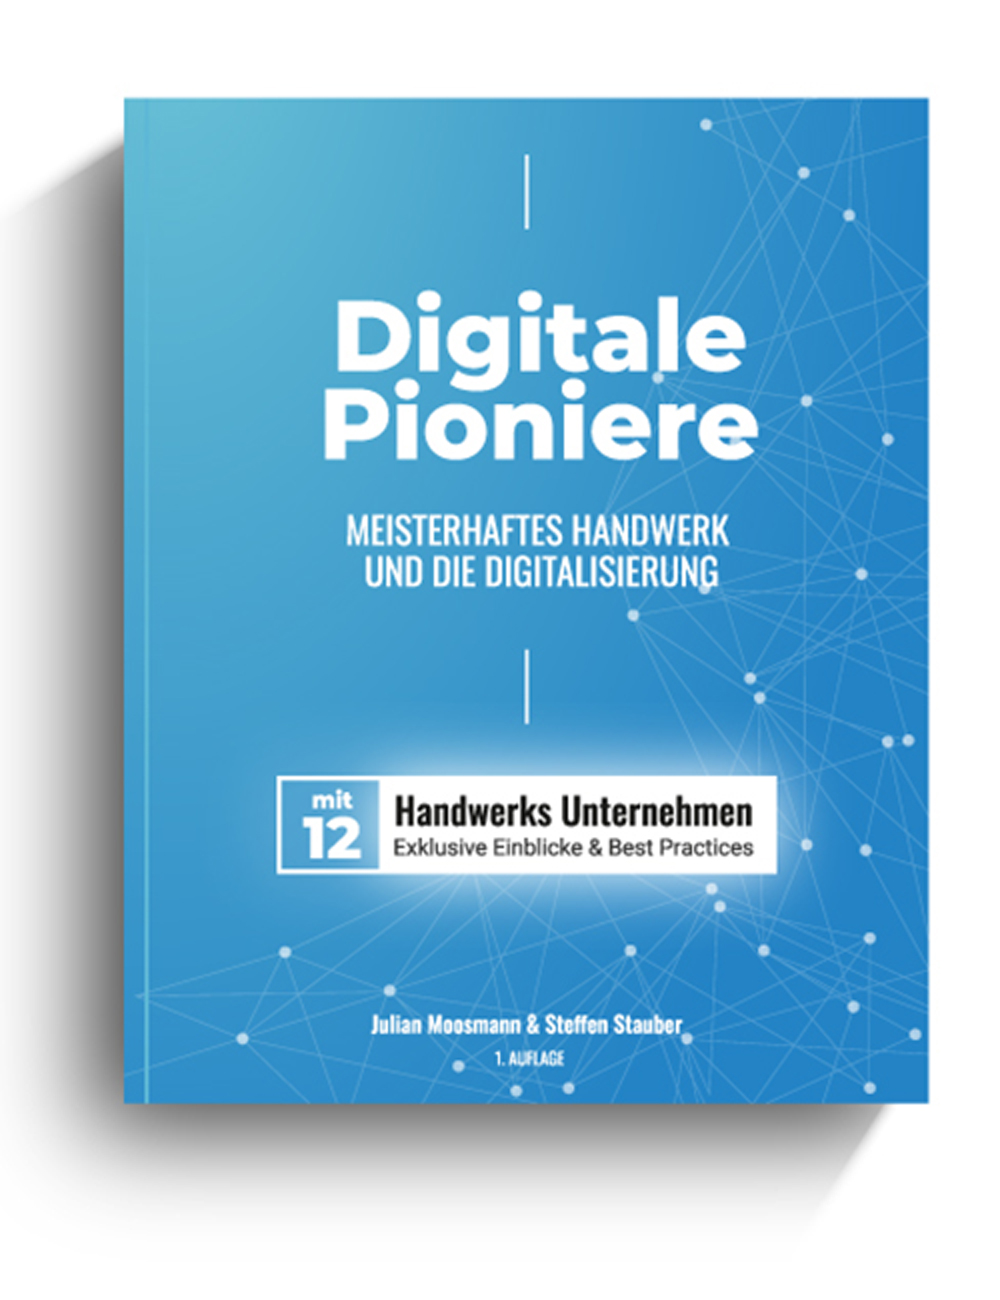 Probeexemplar Buch Digitale Pioniere